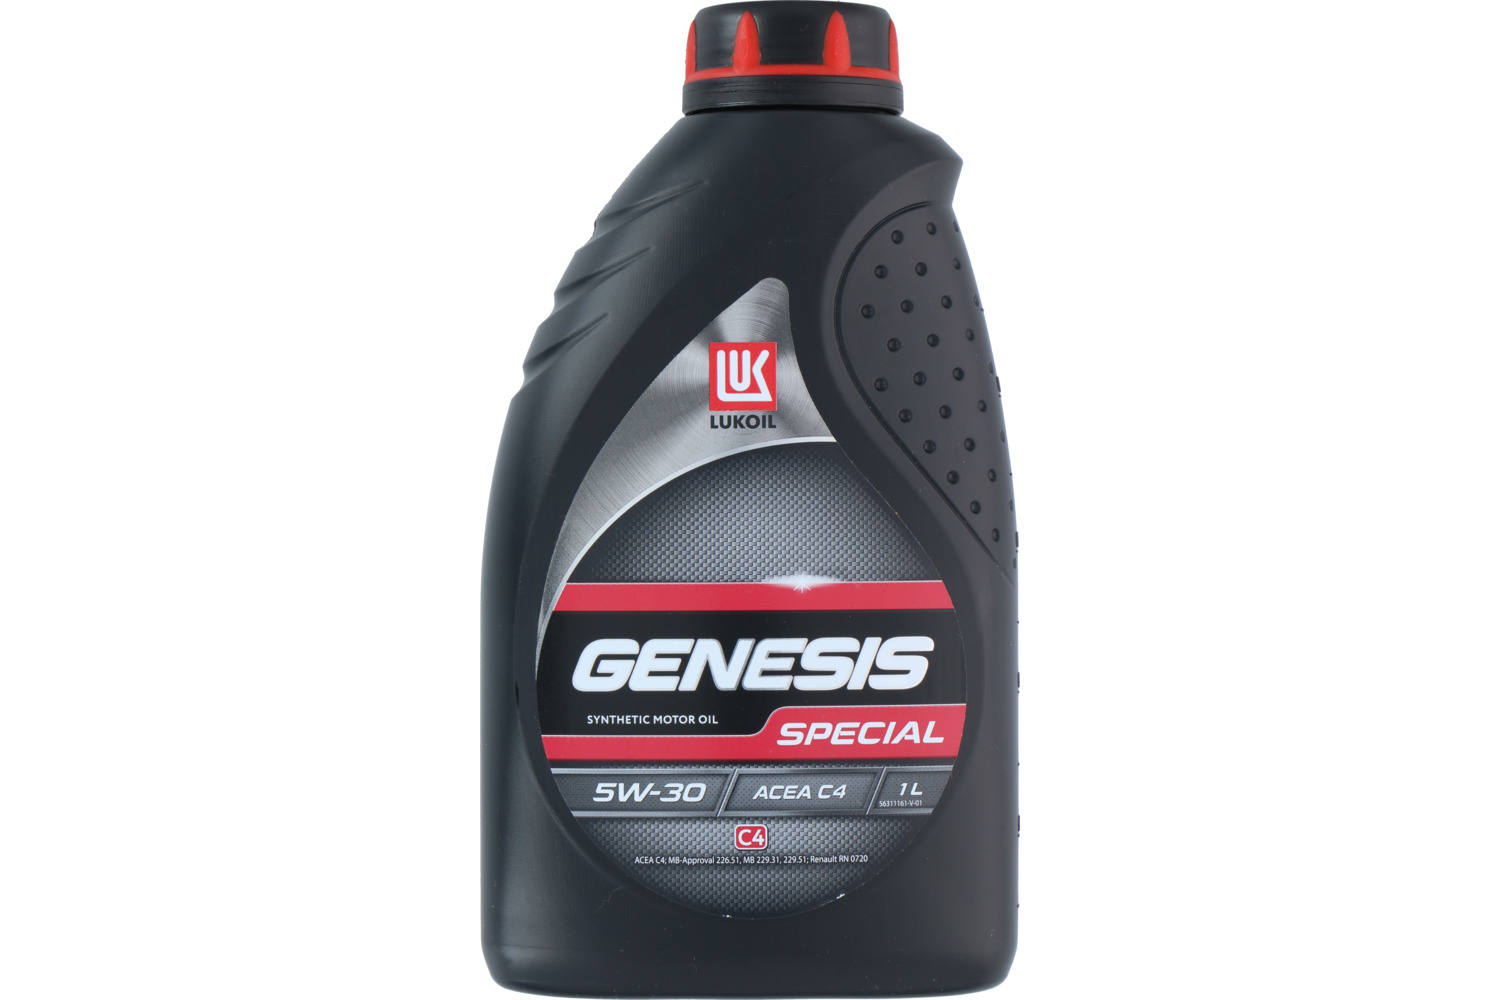 Motorolie, Lukoil Genesis Special synthetic, 5W30 ACEA C4, 1l 2